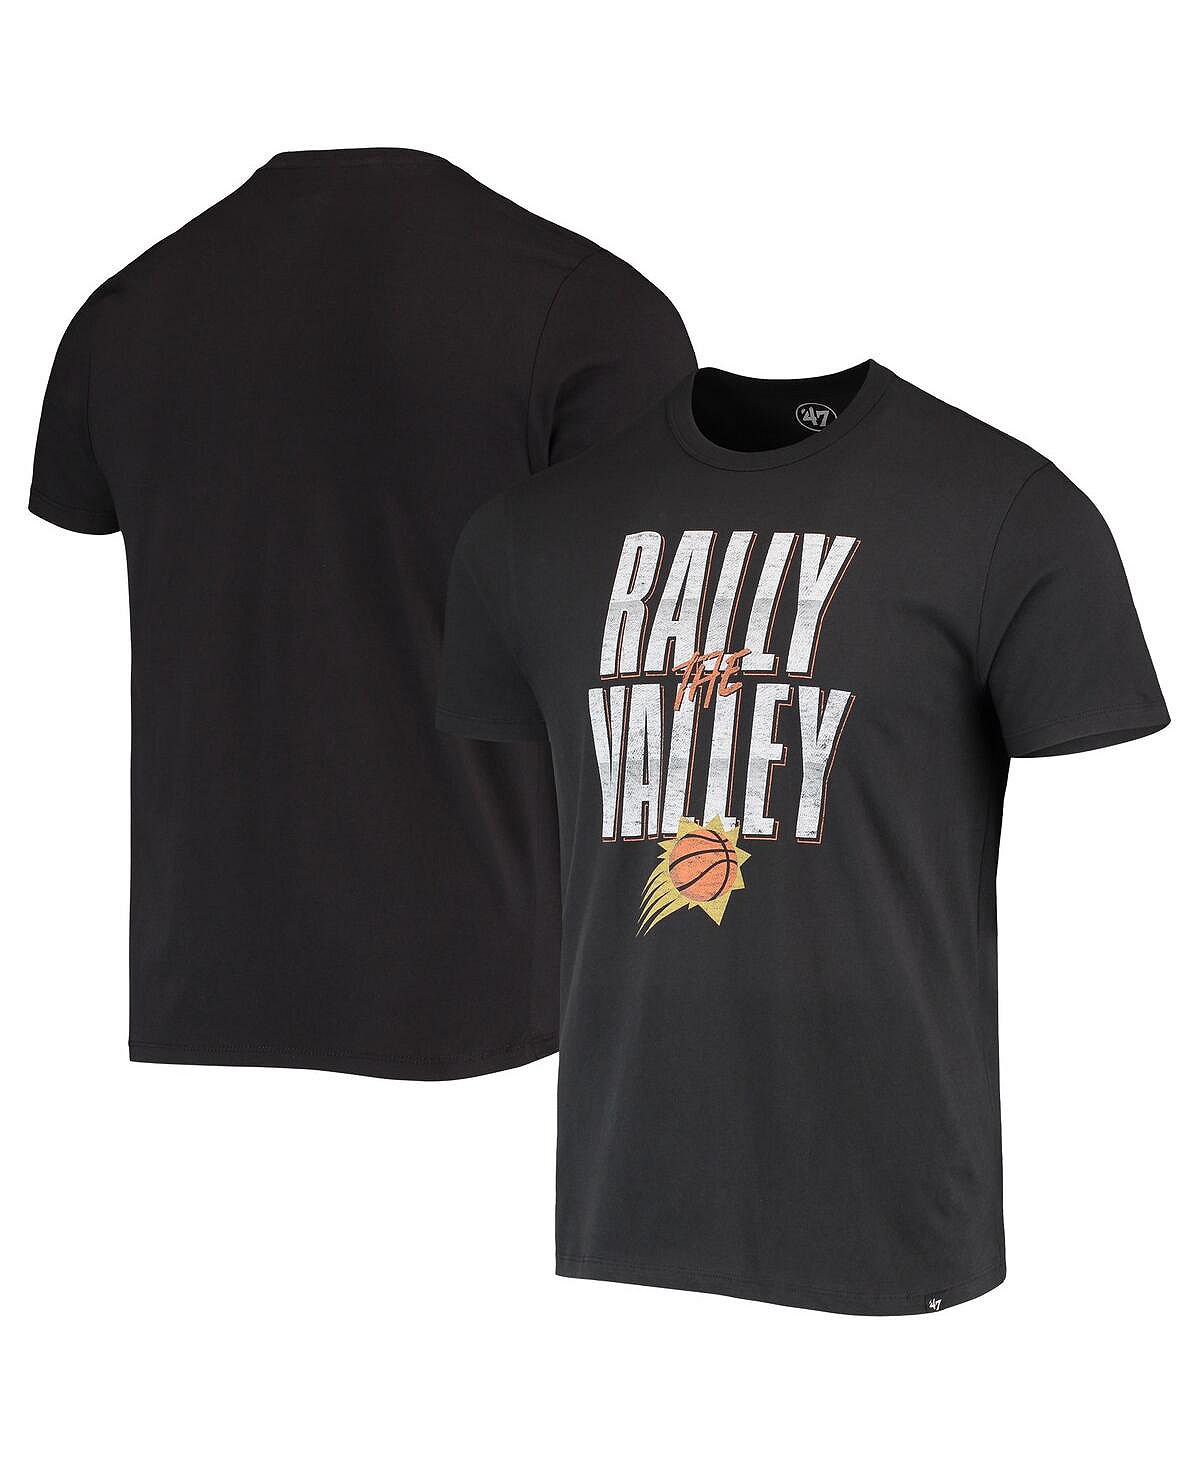 Мужская черная футболка phoenix suns hometown regional rally the valley '47 Brand, черный